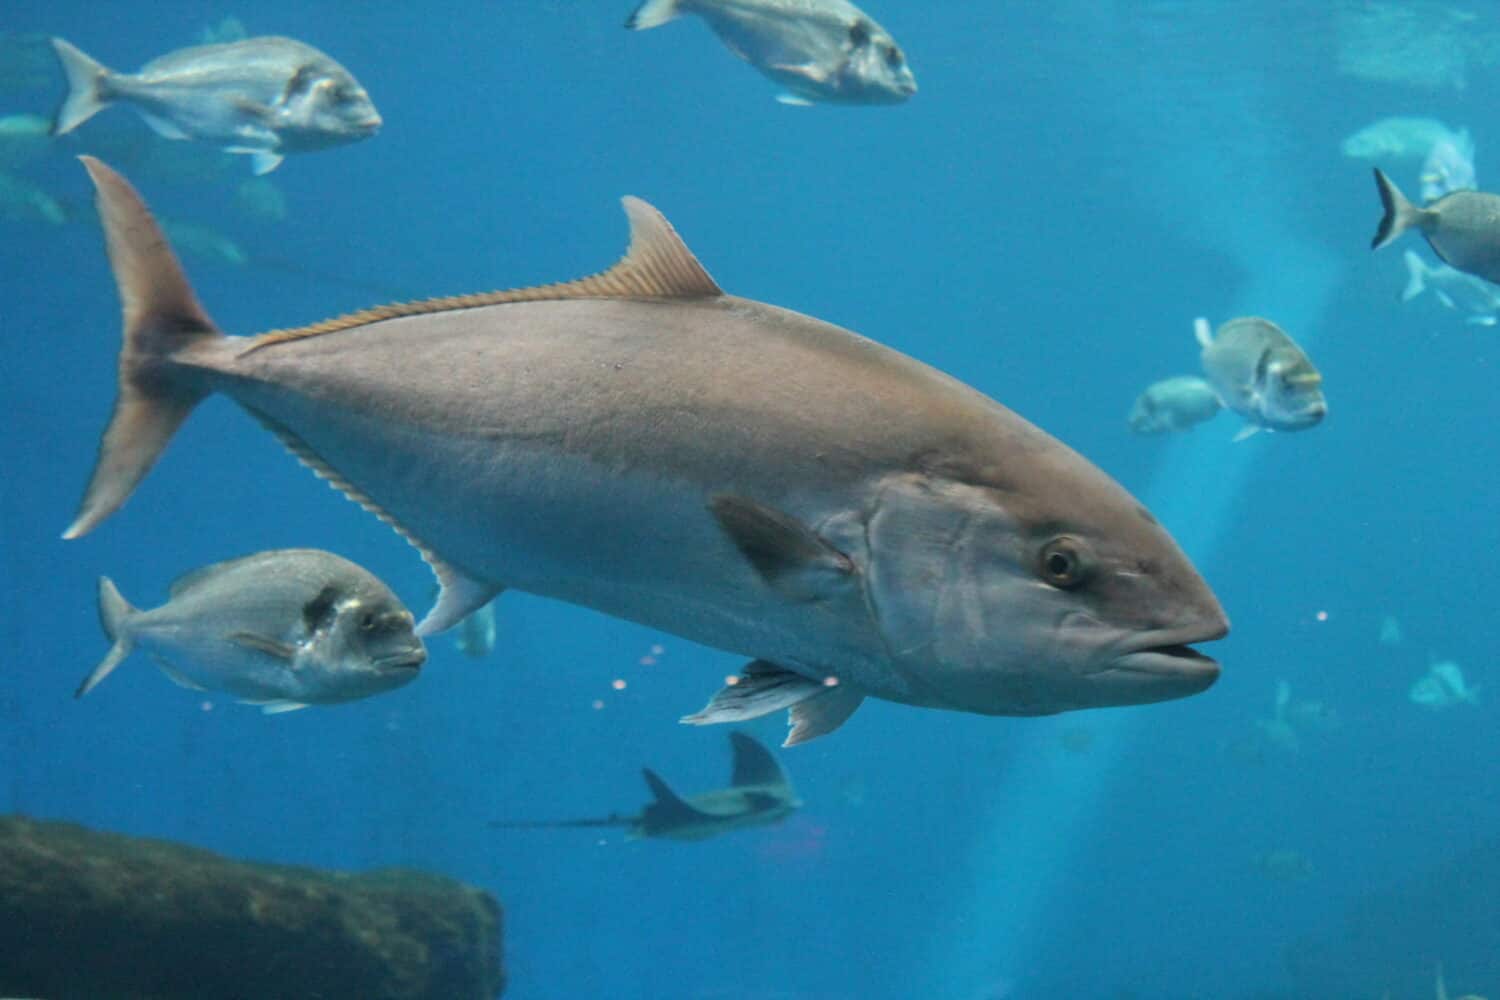 tuna fish swimming in ocean underwater known as bluefin tuna, Atlantic bluefin tuna (Thunnus thynnus) , northern bluefin tuna, giant bluefin or tunny - stock photo, stock photograph, image picture